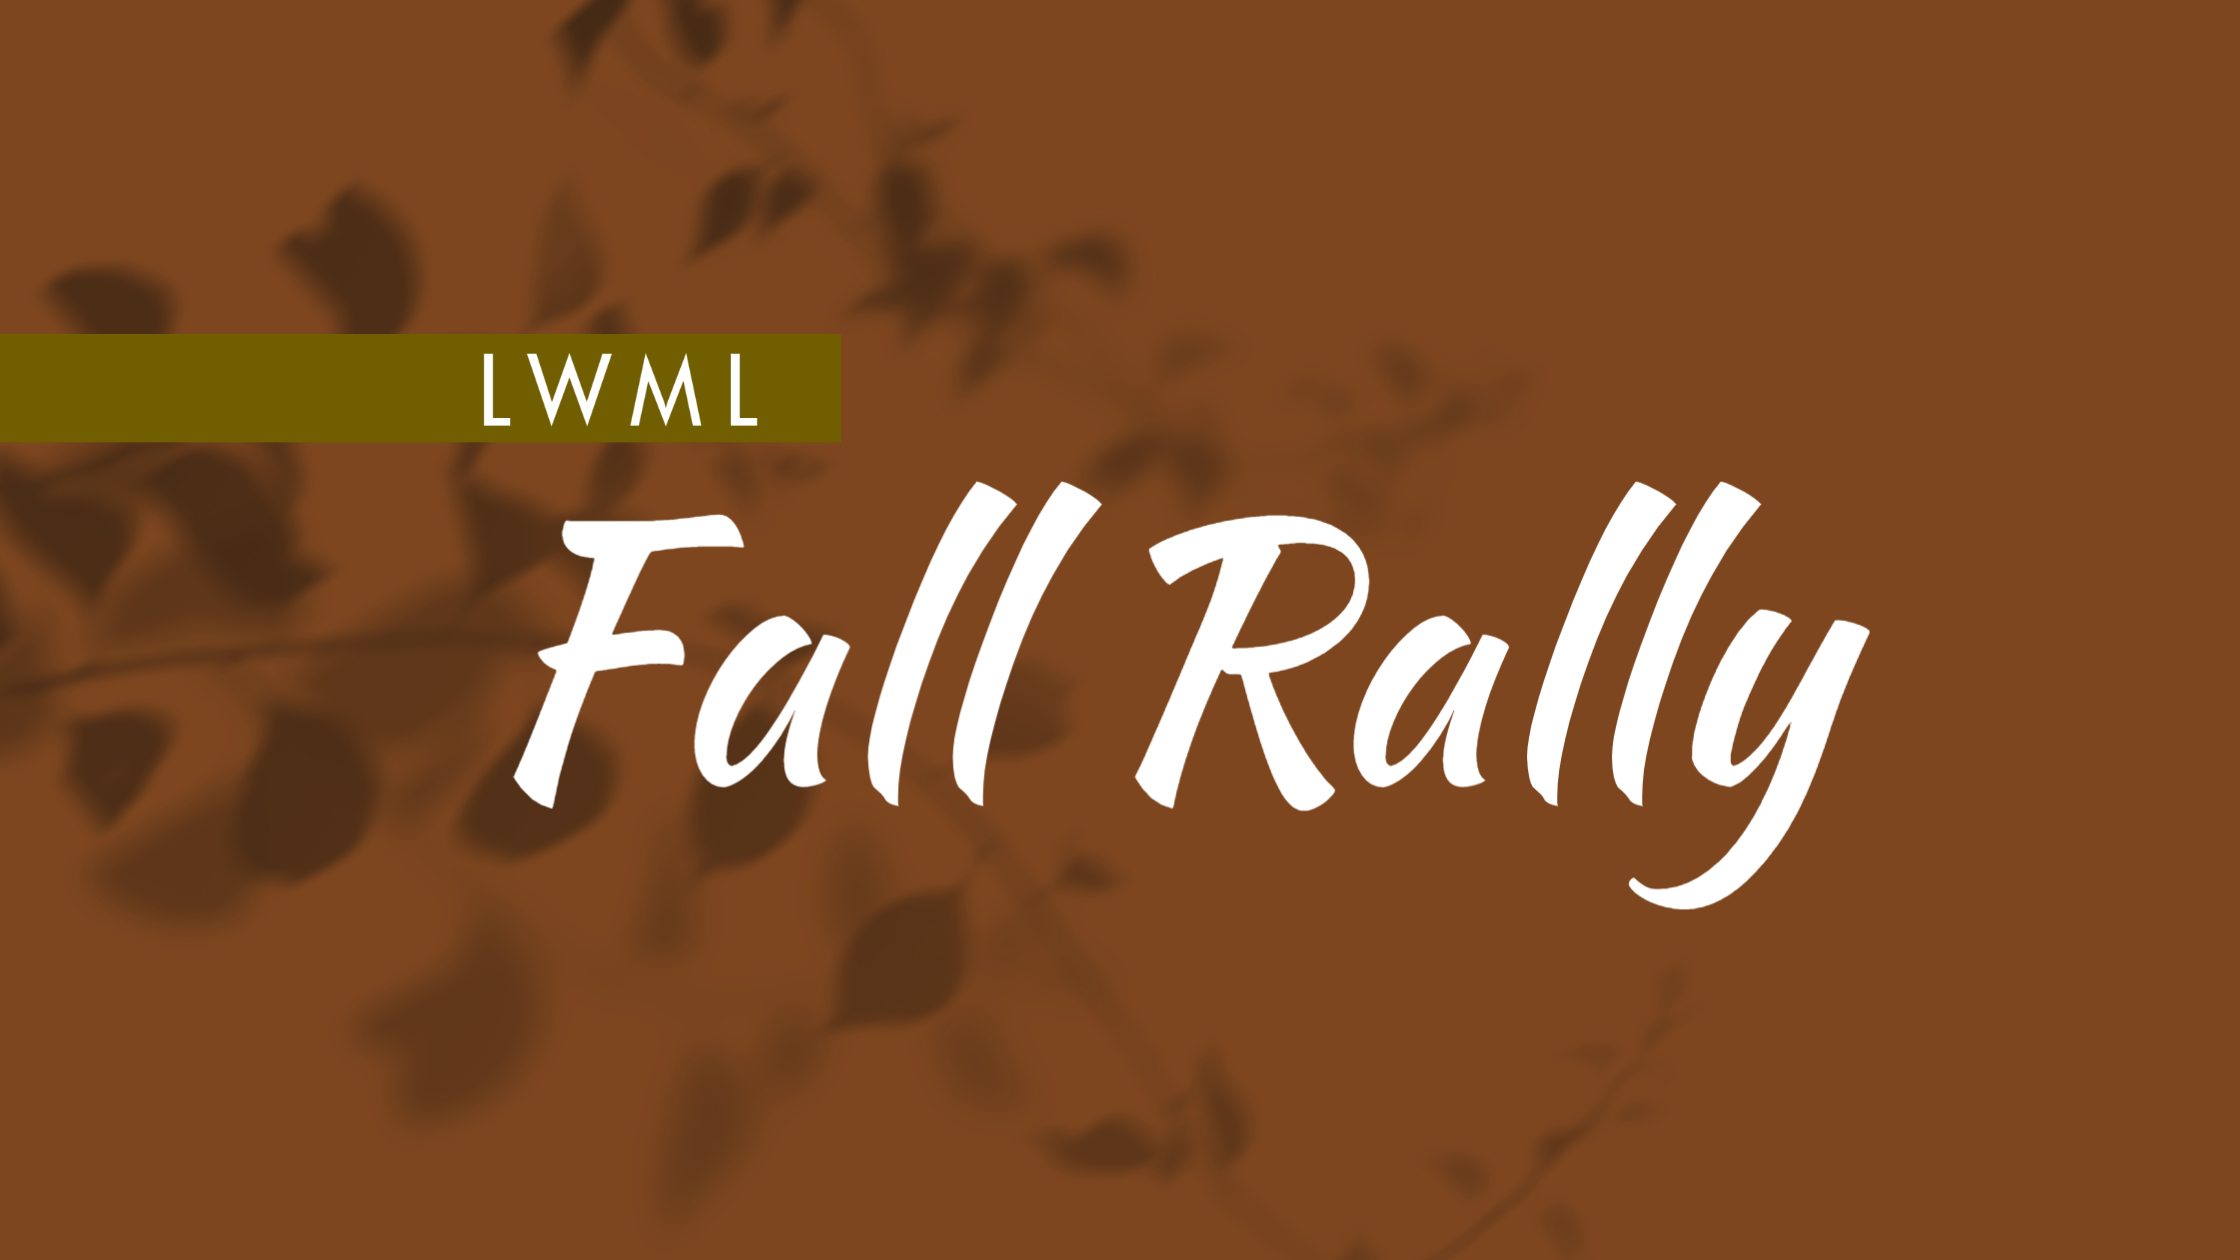 LWML Fall Rally